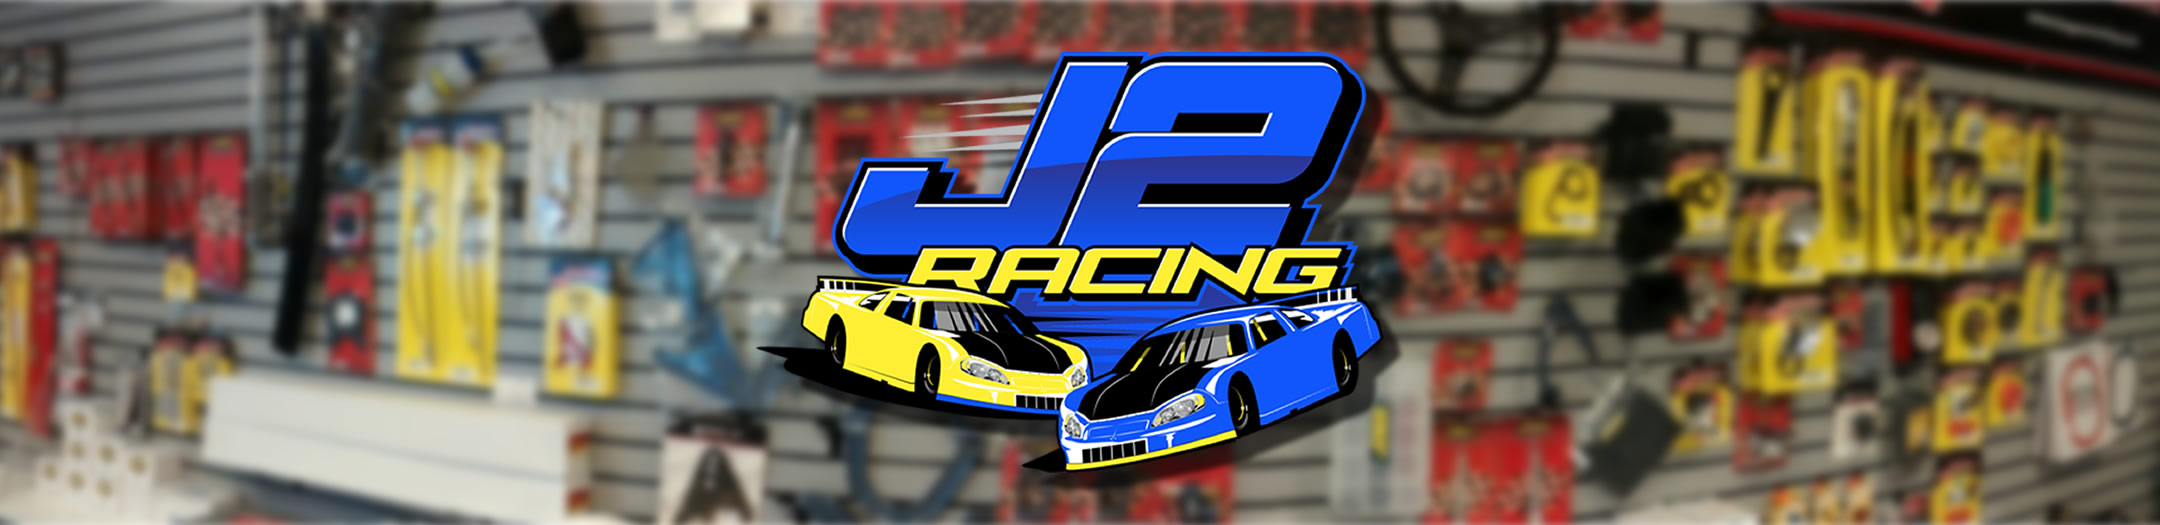 J2 Racing Sponsor